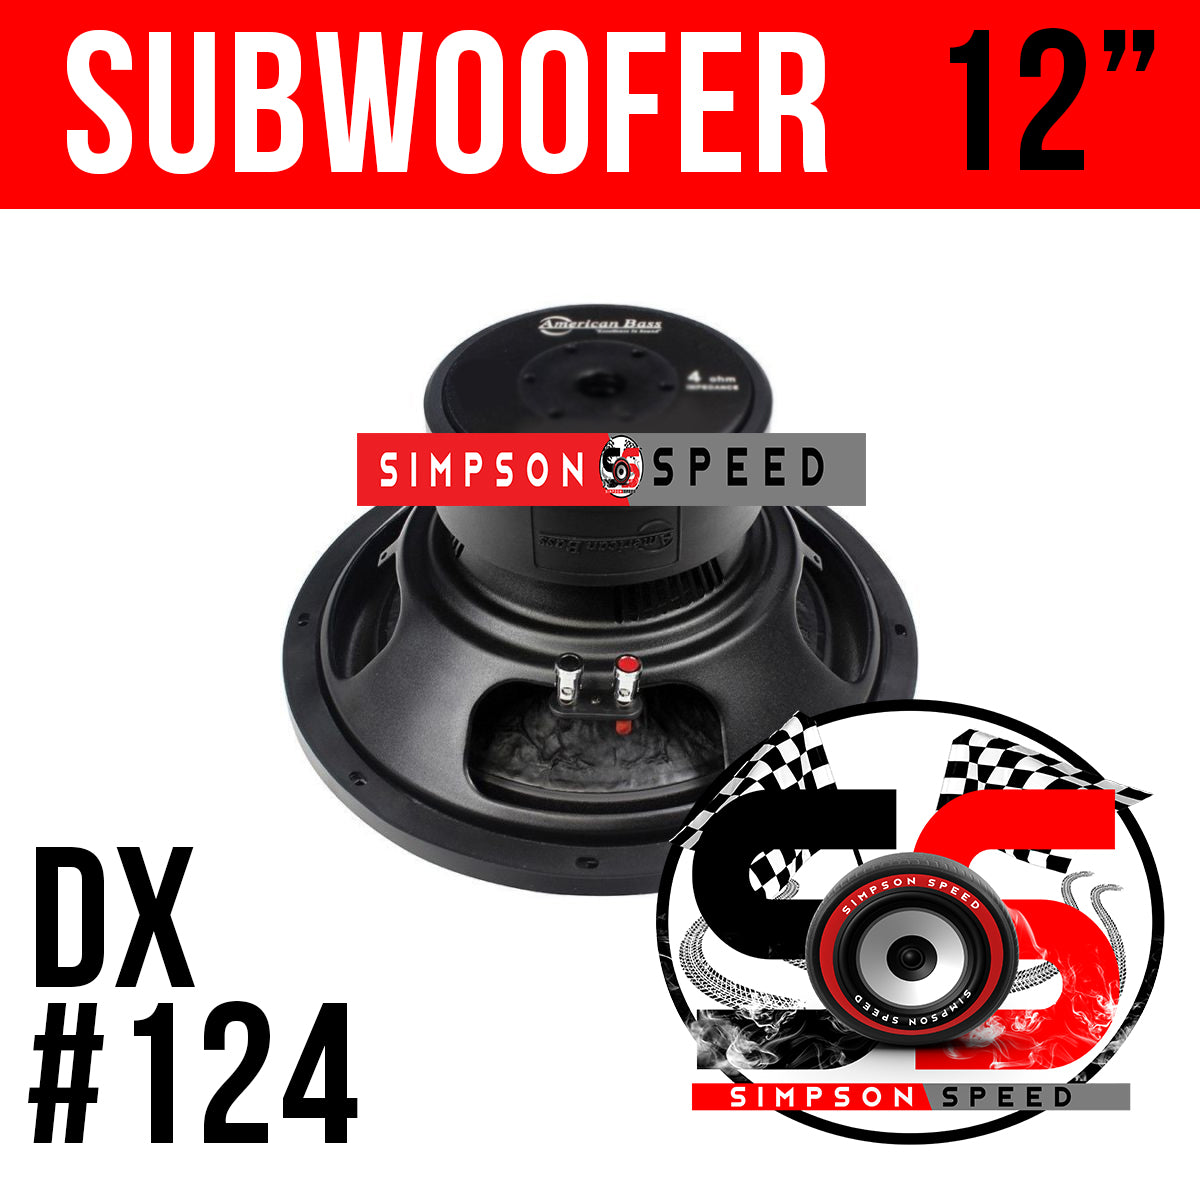 DX 12 American Bass Subwoofer